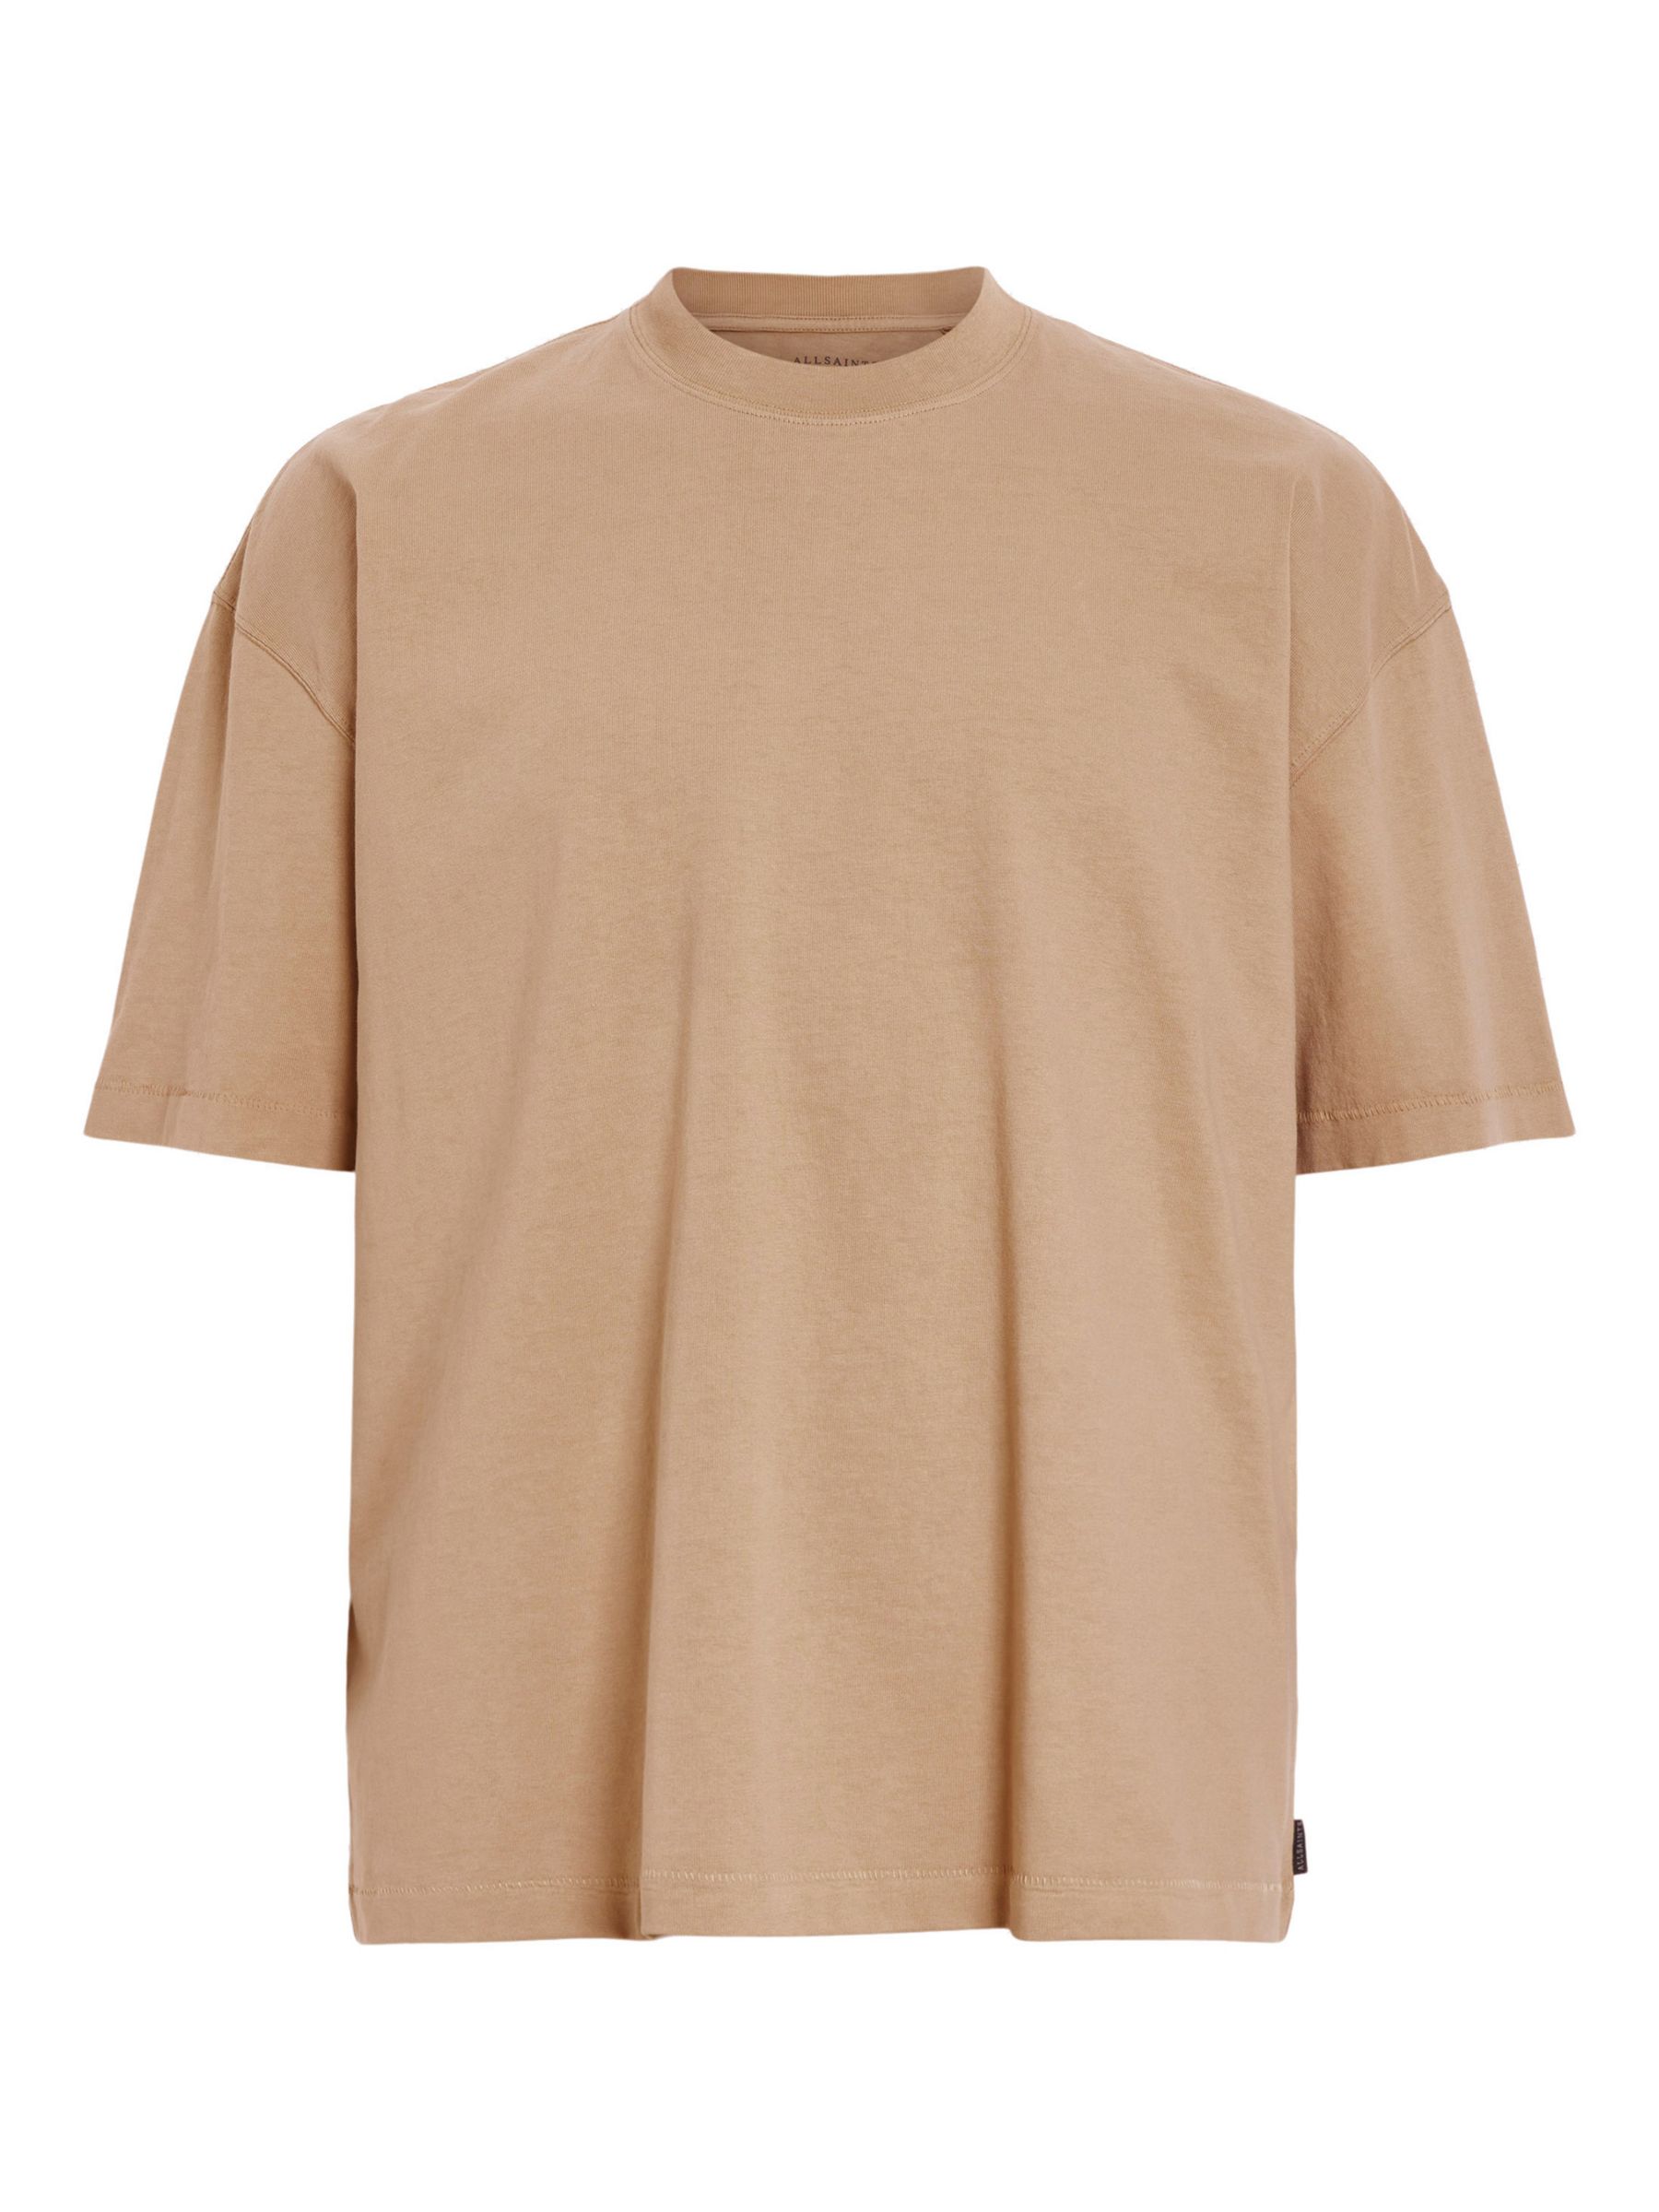 AllSaints Jase Short Sleeve Crew T-Shirt, Moorland Brown, L